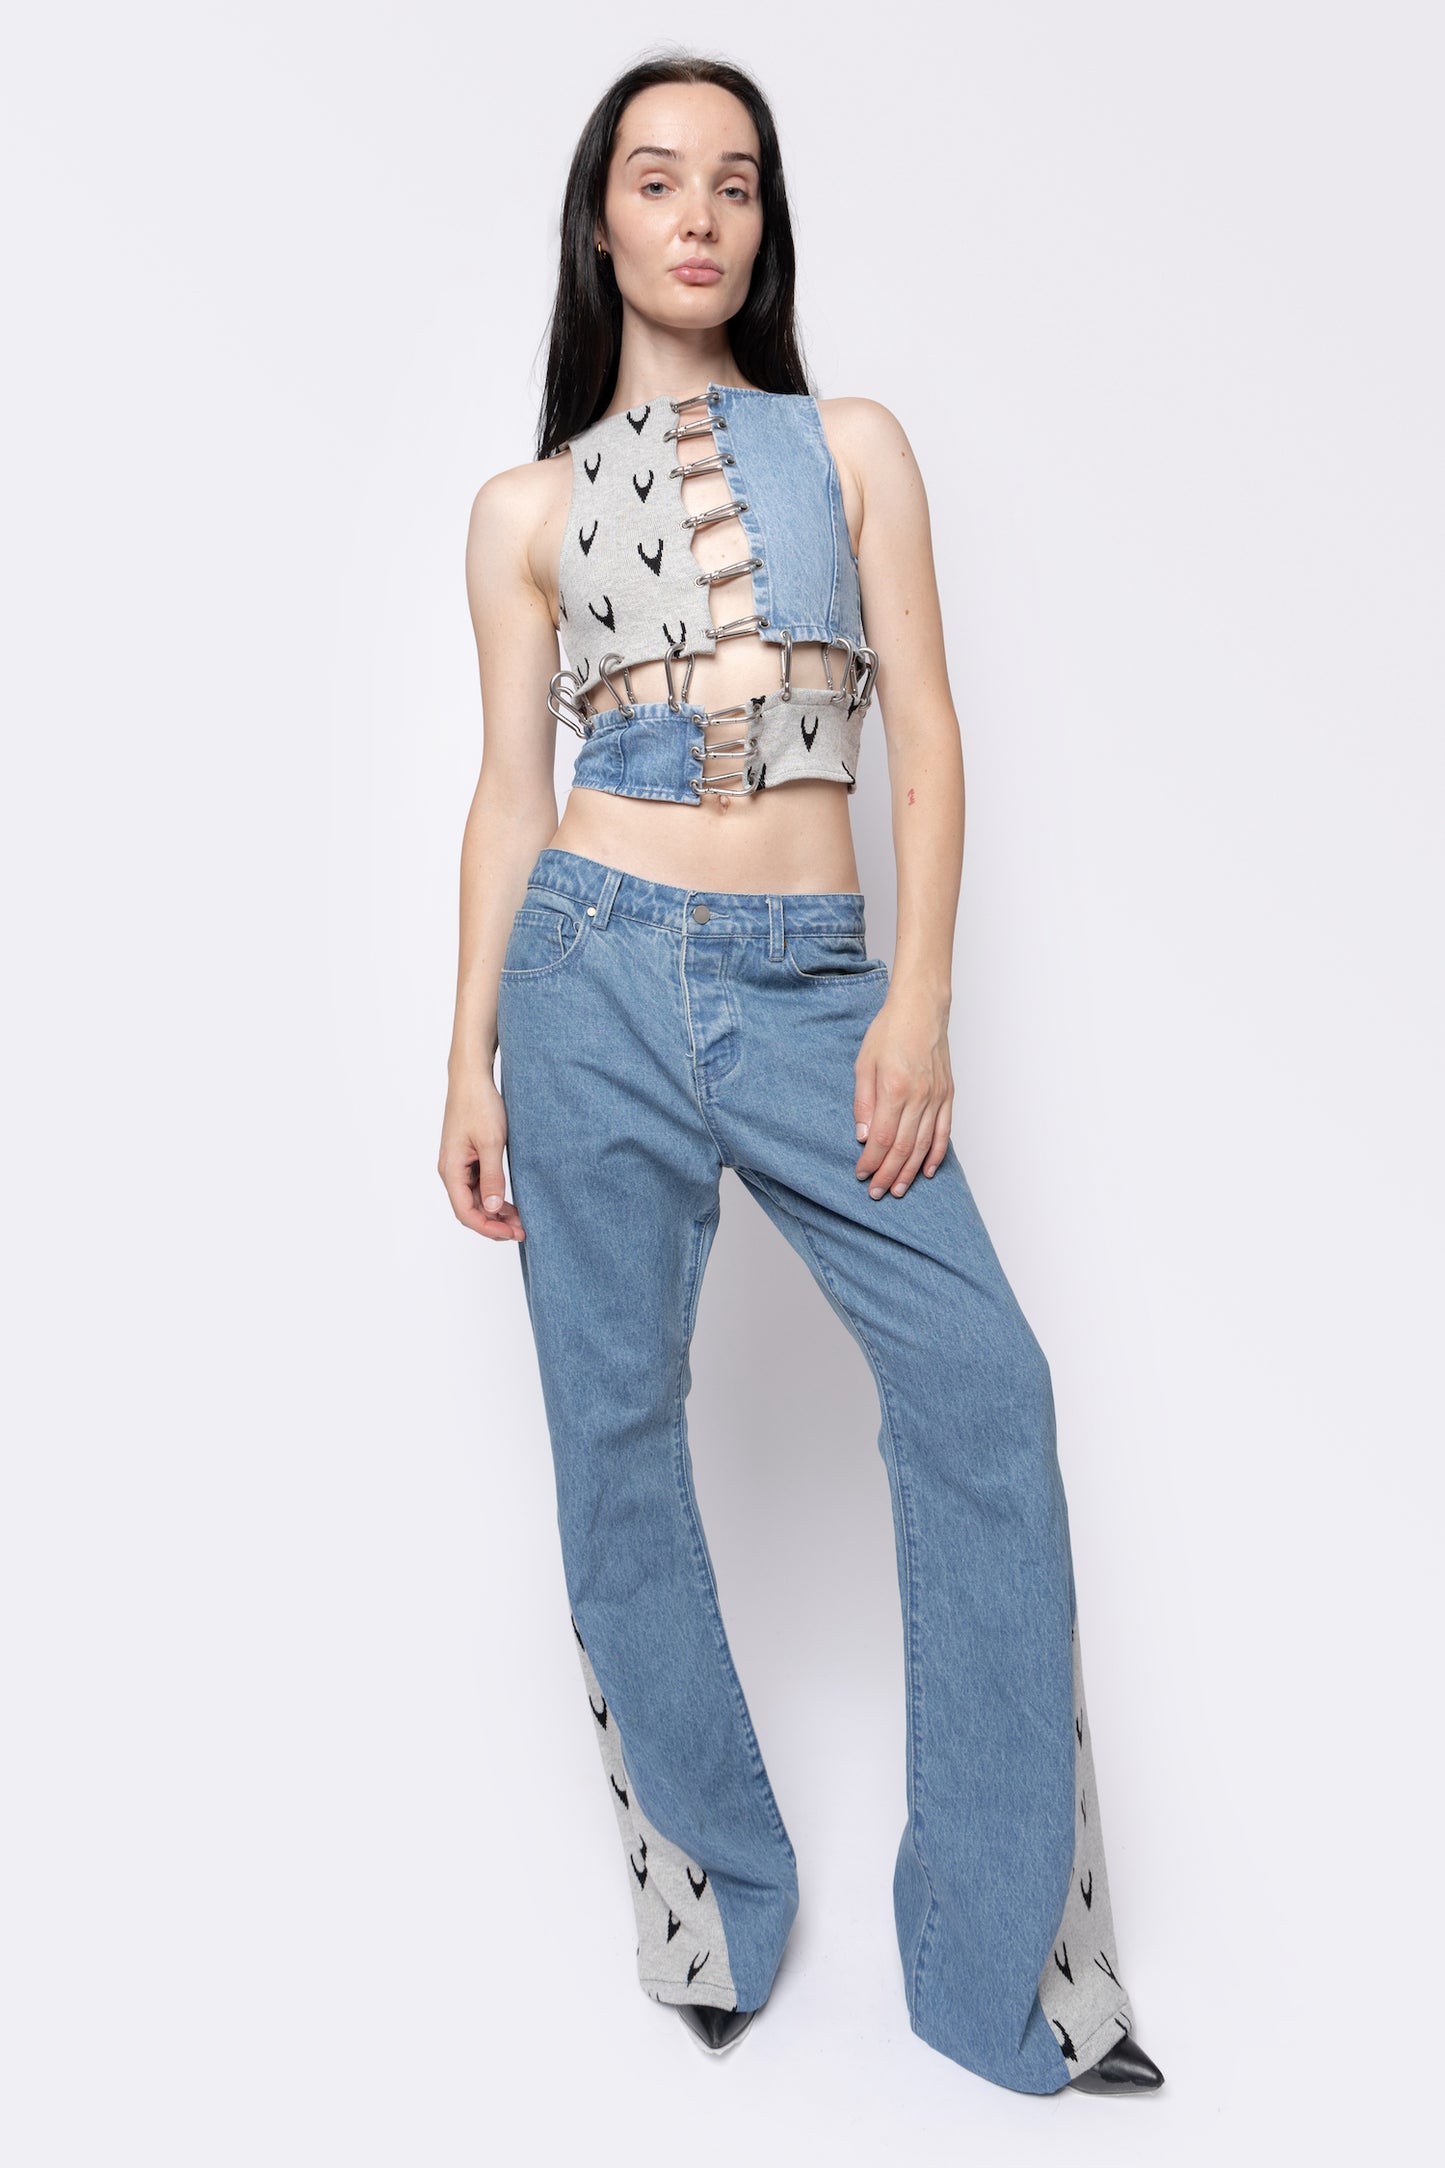 Jacquard Knit/ Denim Mix Media FANG Jeans